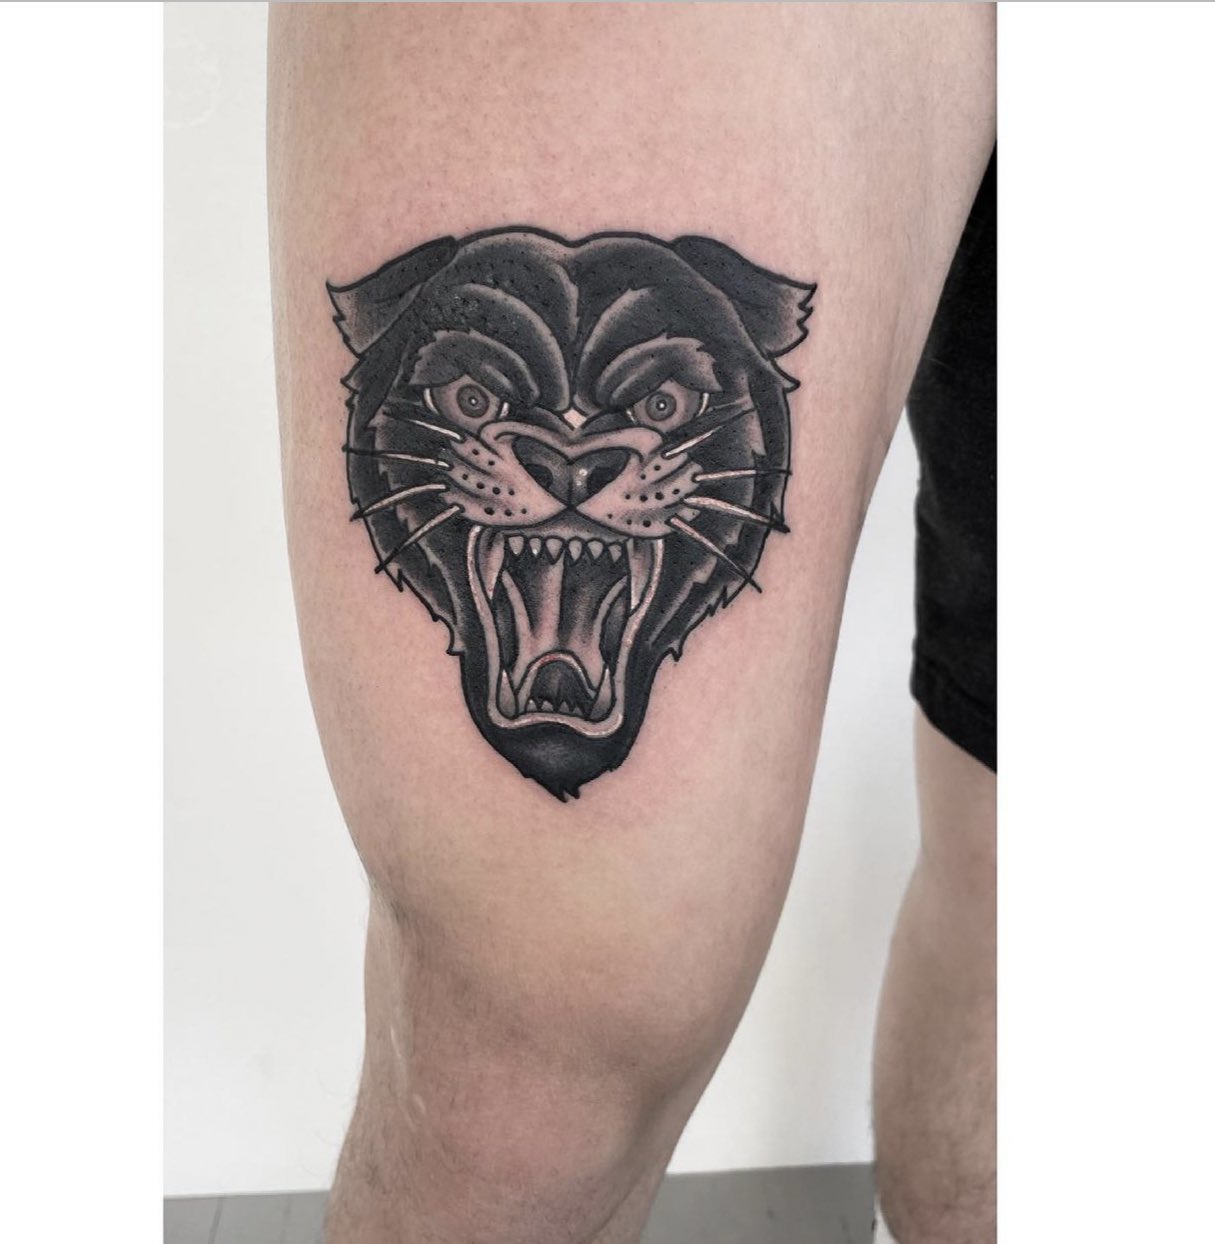 Jolly.Rogers.Tattoo on Twitter: fun neo traditional Panther 😊 Done by Katrine @inkedmag @eternalink @cheyenne_tattoo @mokkitattoosupply #tattoo #tattooinspiration #tattoos #ink #inkedlife #inkedup #blackandgreytattoo #inkspiration ...